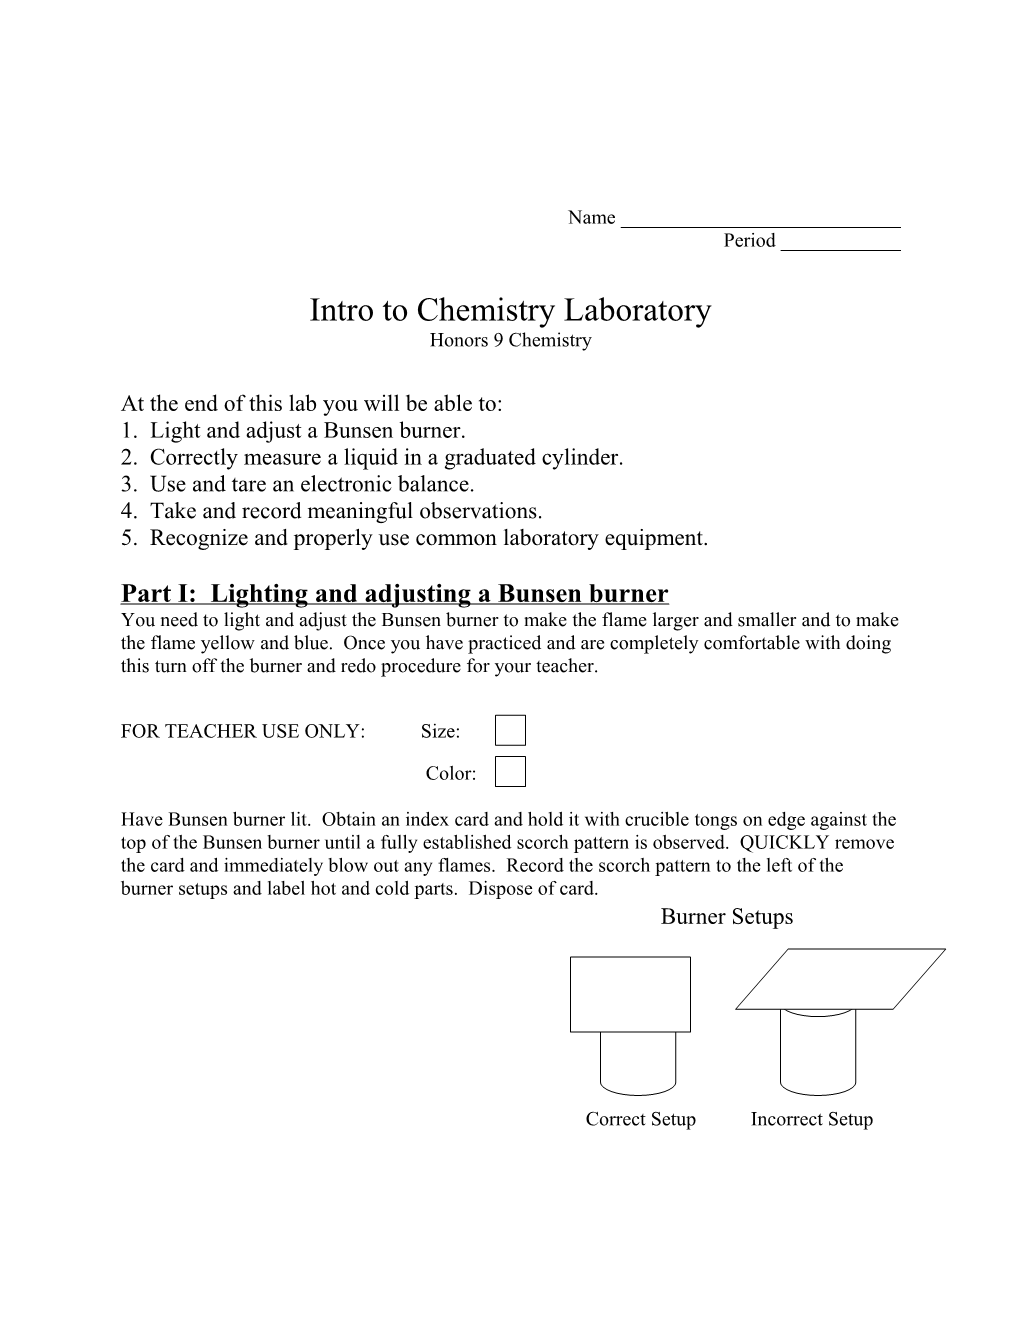 Intro to Chemistry Laboratory